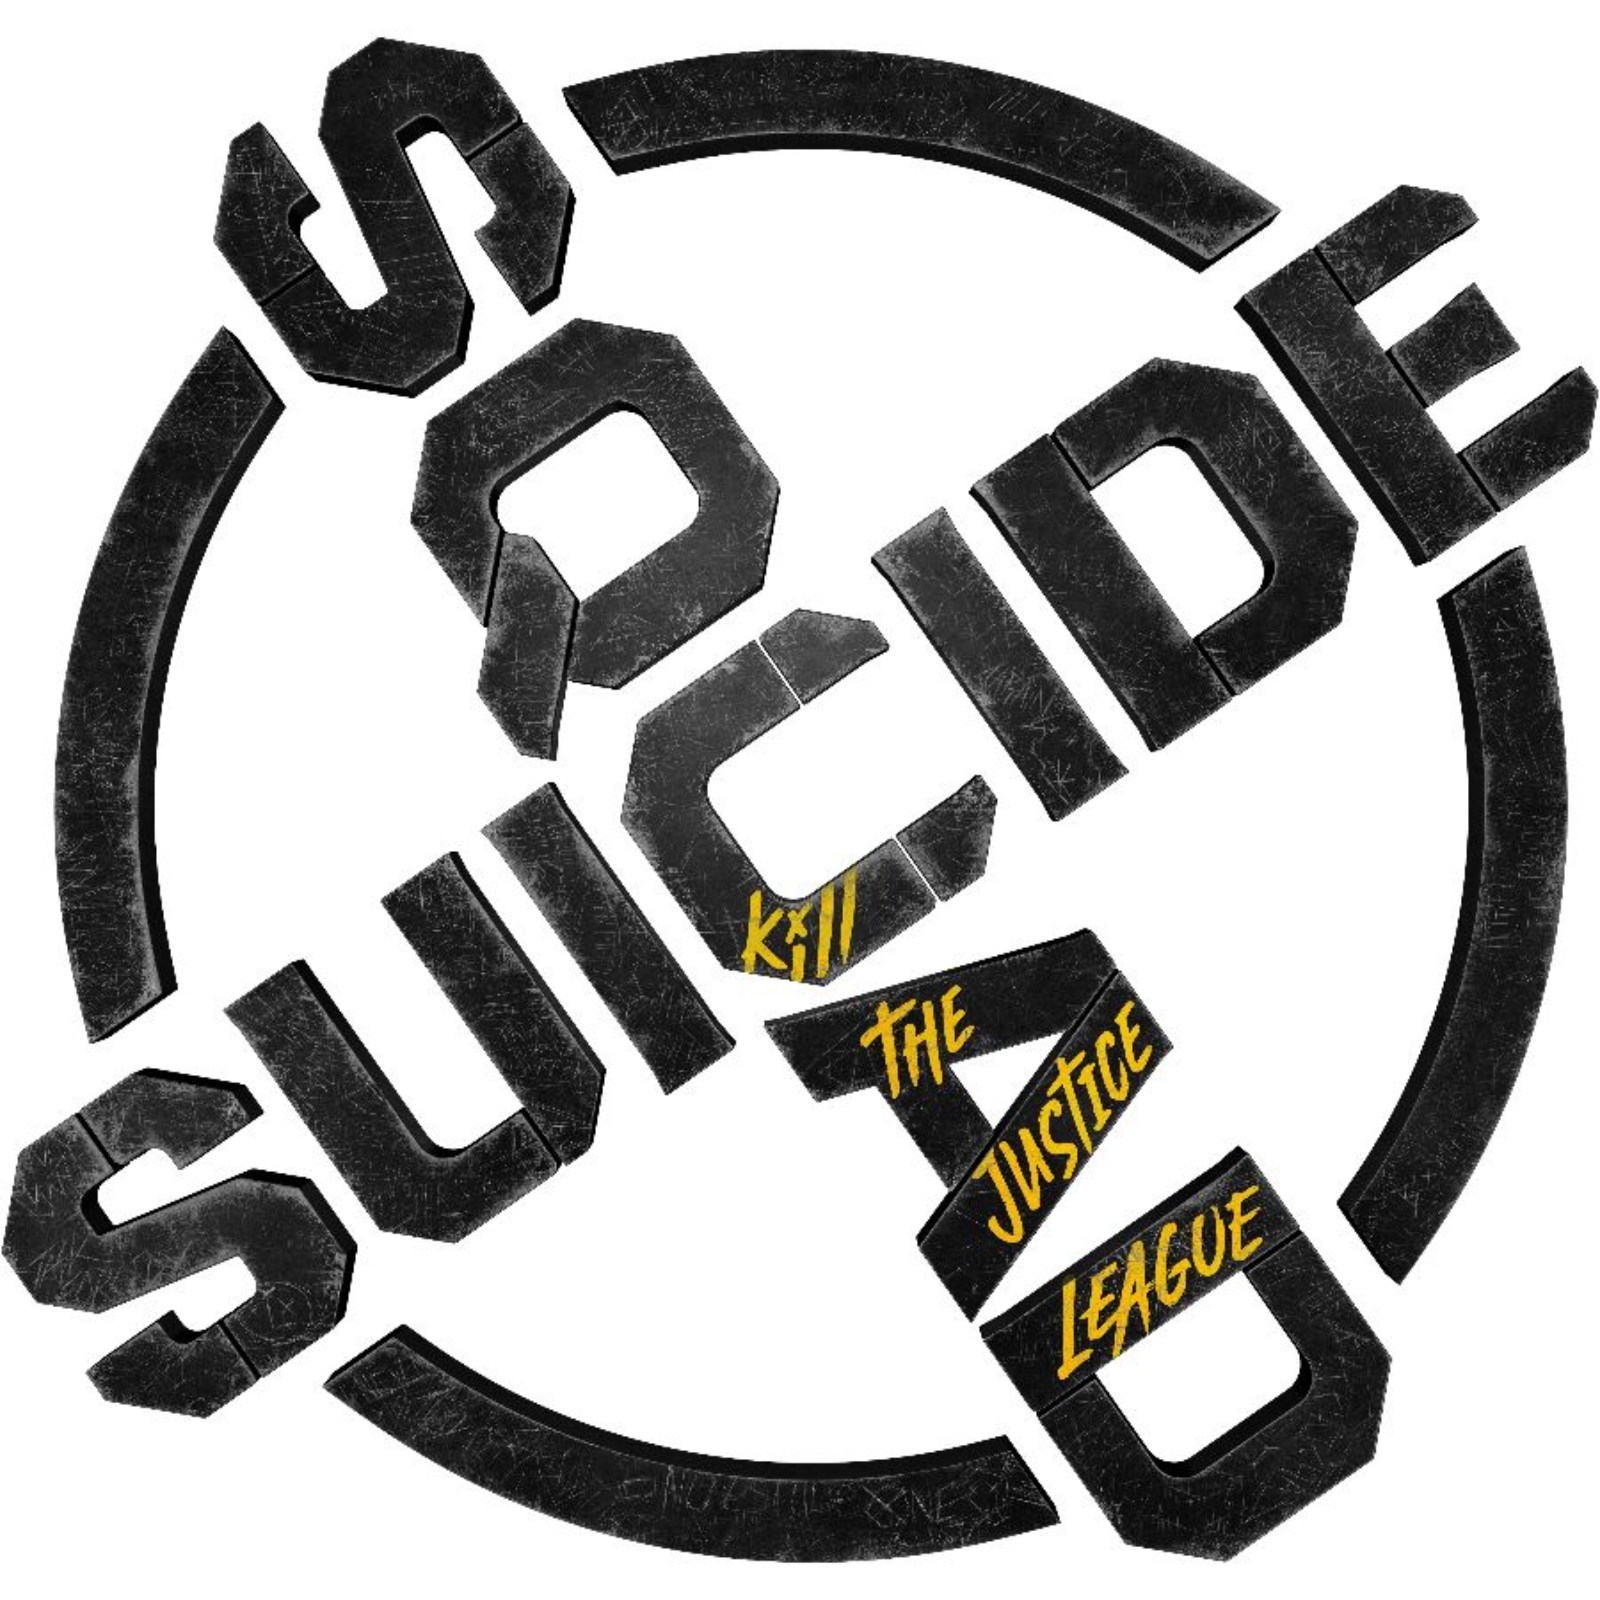 http://rko.fm/wp/wp-content/uploads/2020/08/suicide_squad_001.jpg